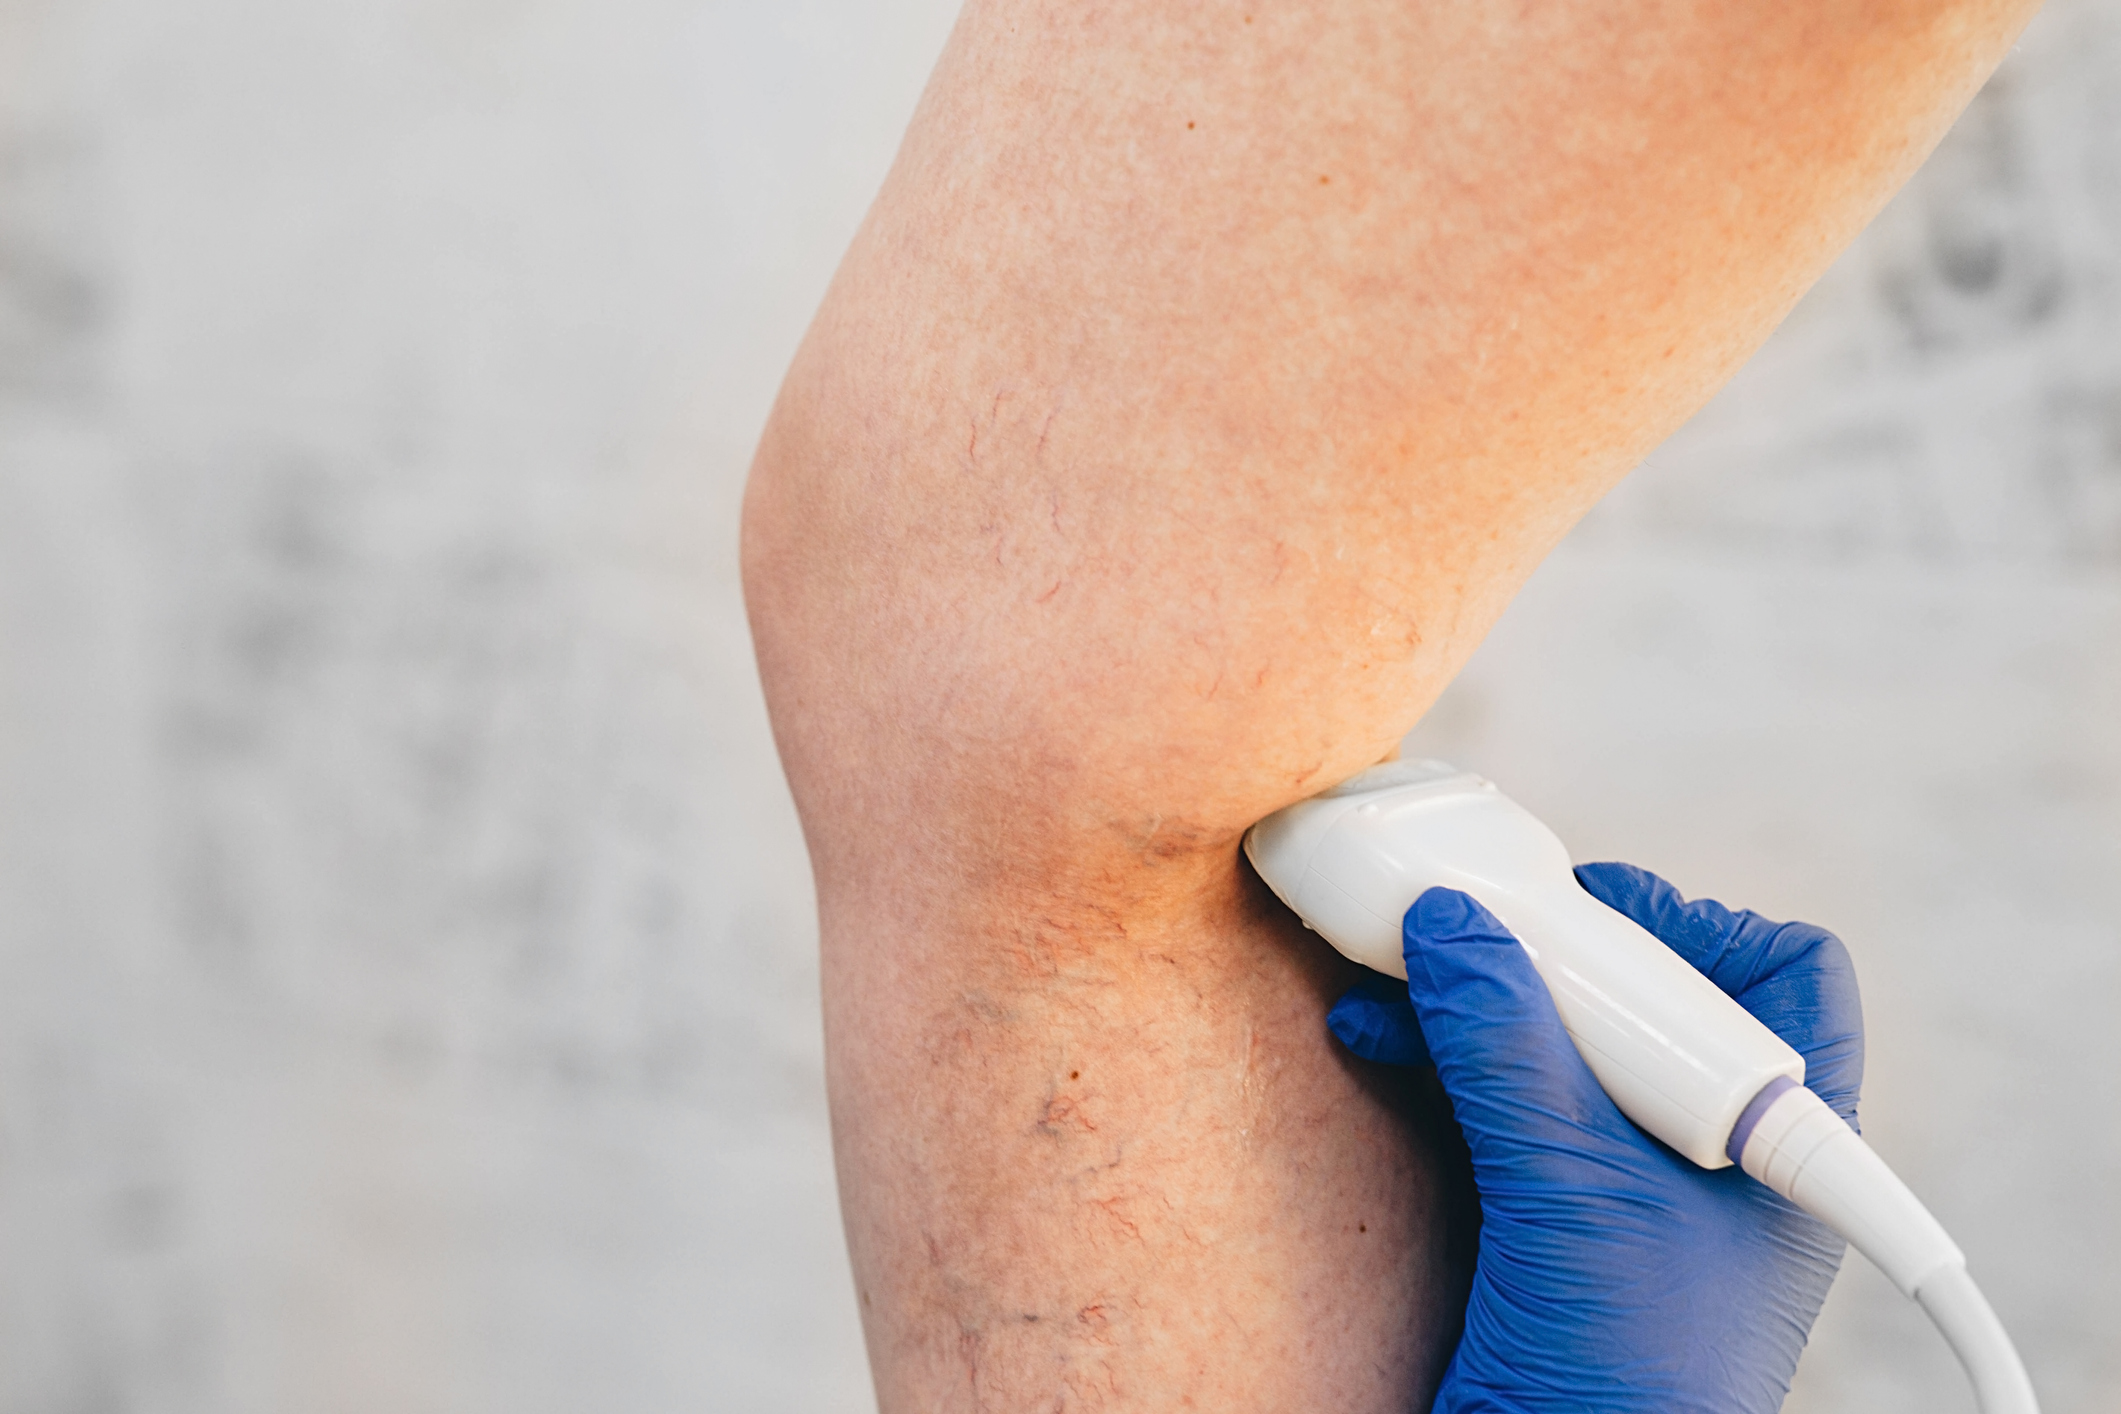 ultrasound exam veins on the leg